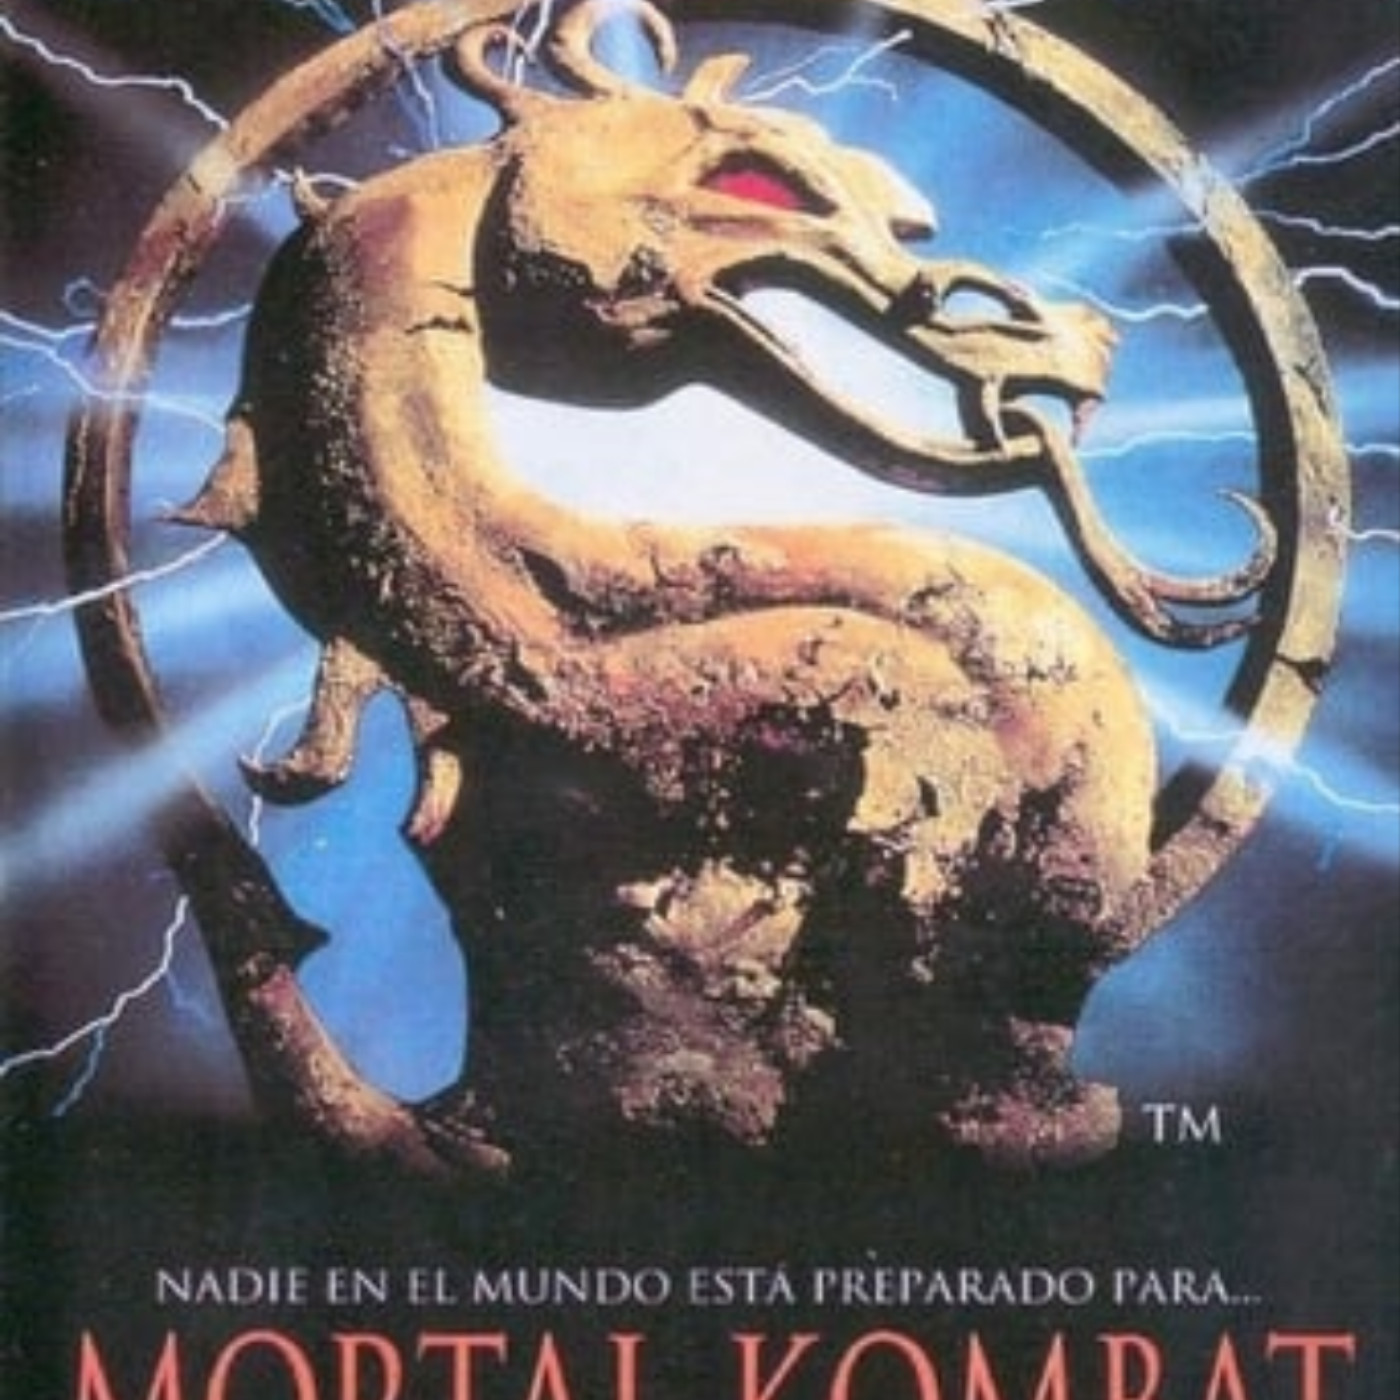 Ver Mortal Kombat 1995 online gratis en español y latino | Podcast on  SoundOn